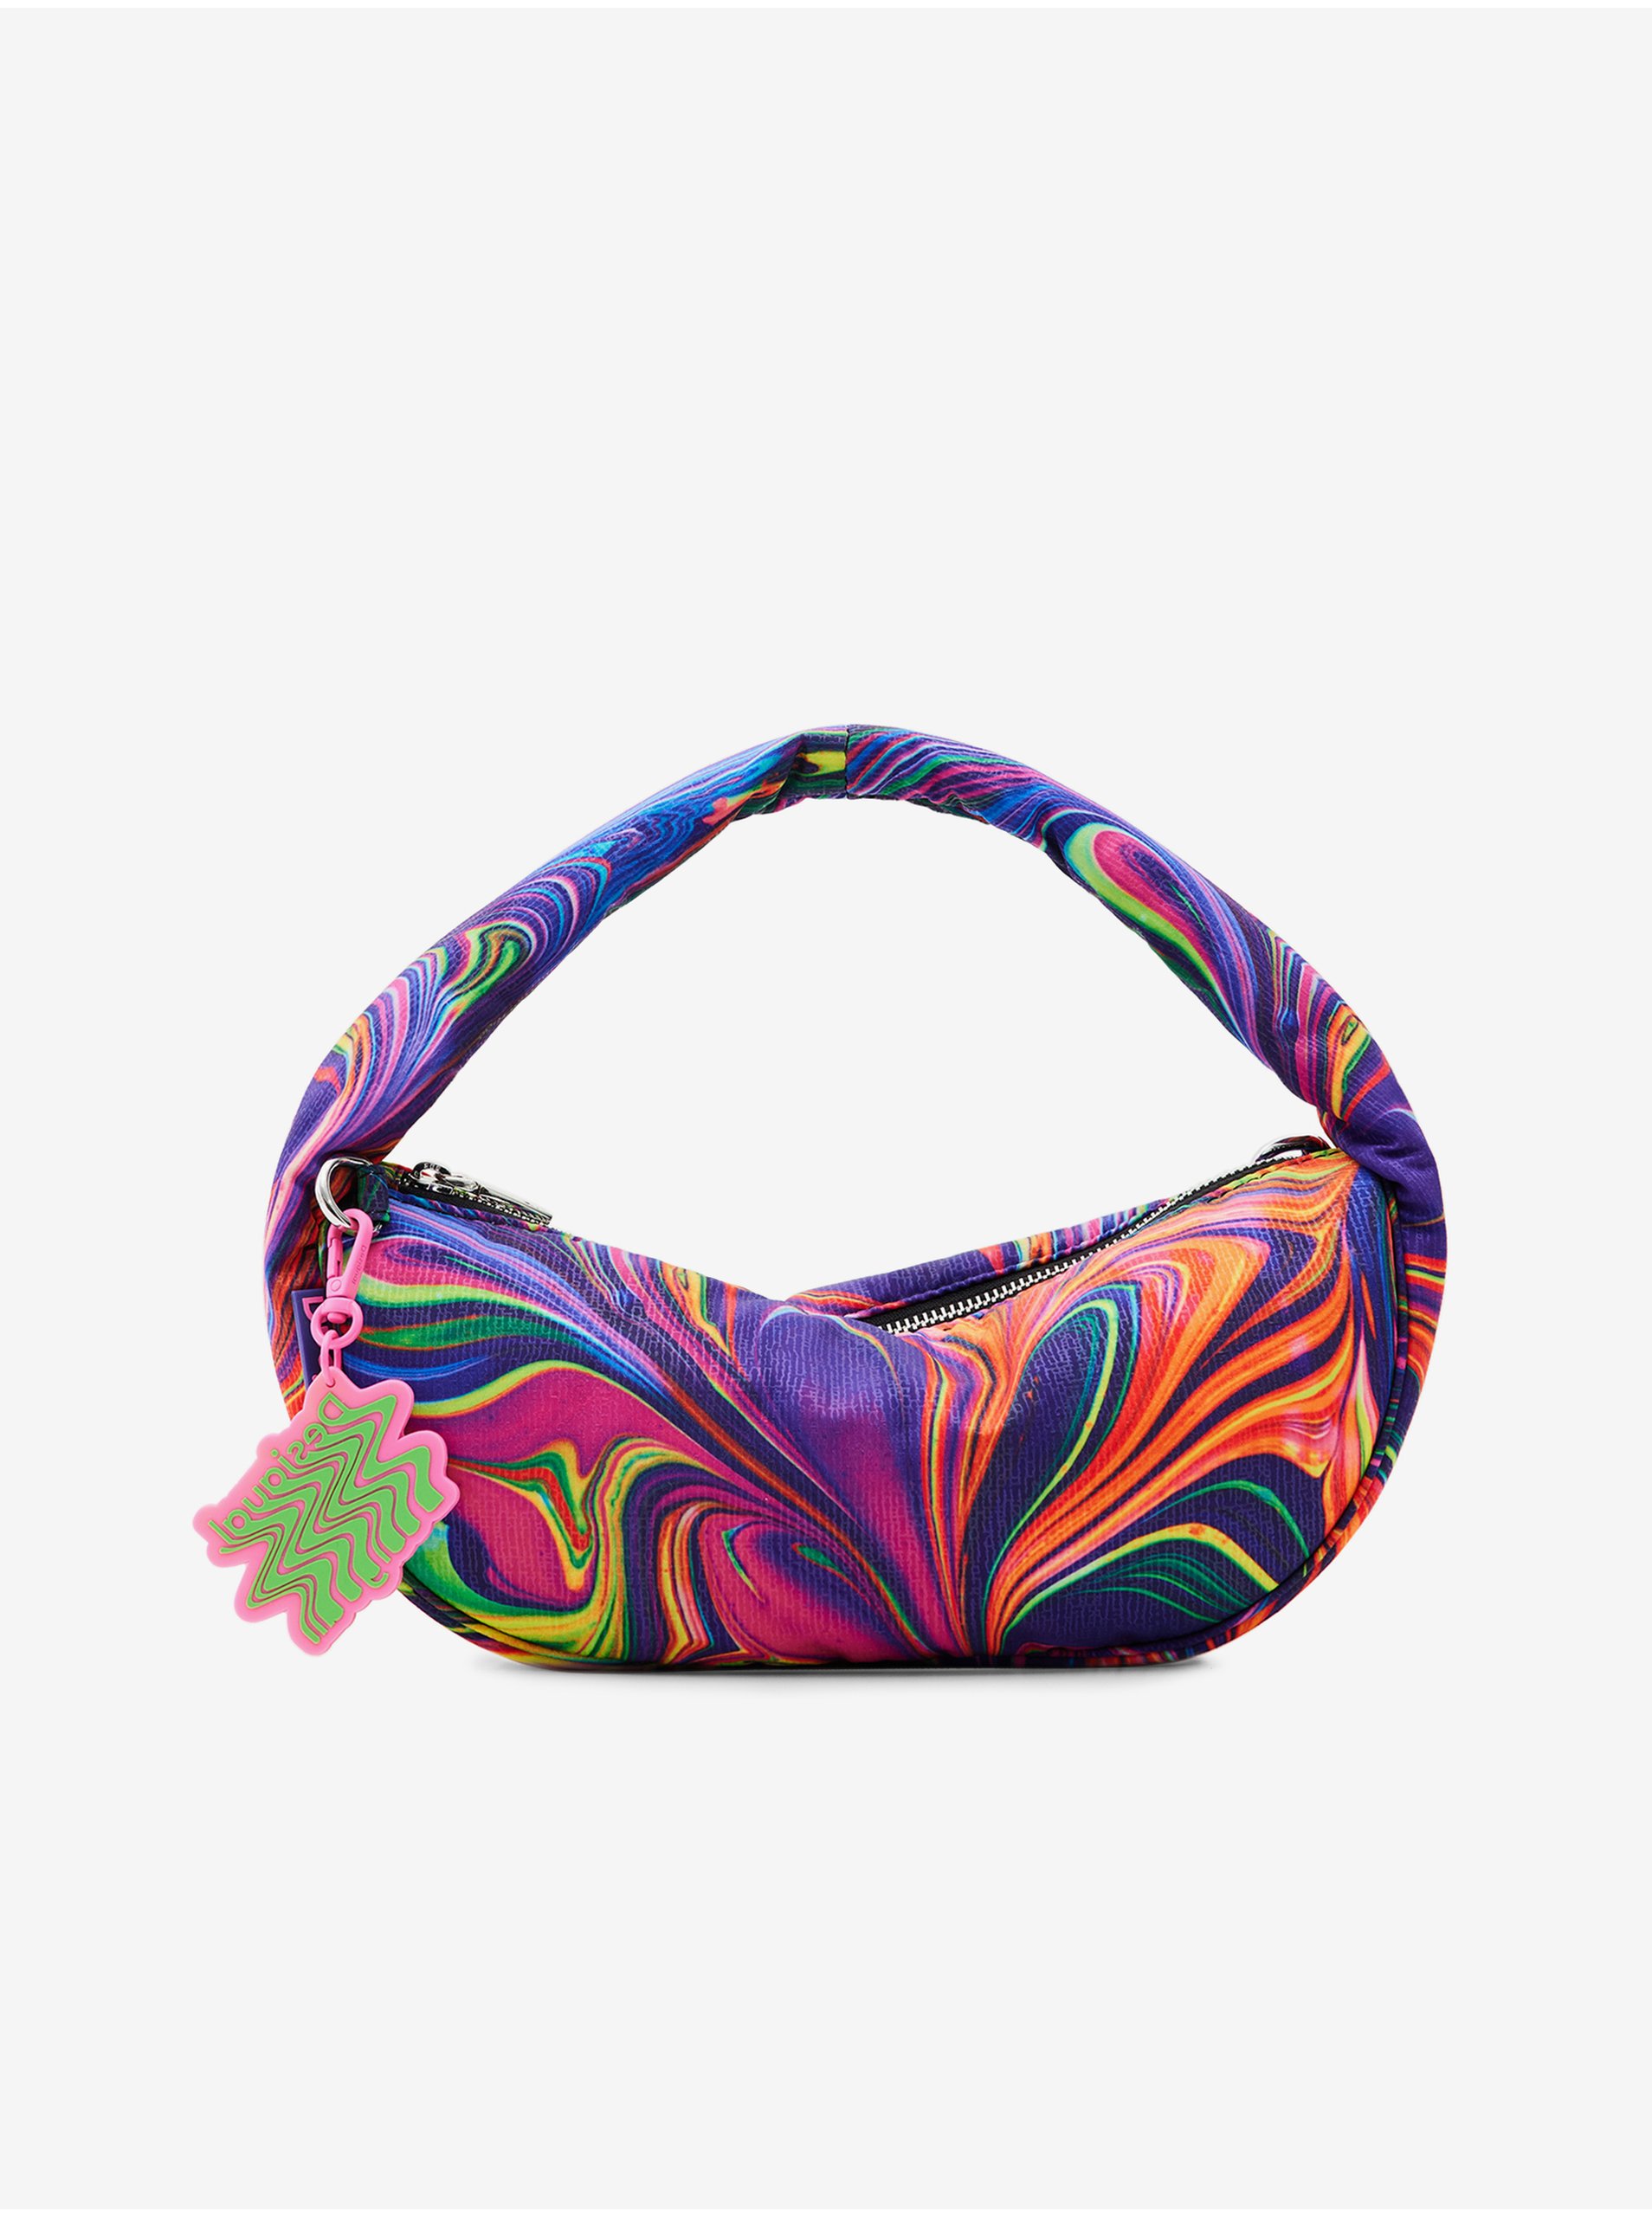 E-shop Oranžovo-fialová dámská vzorovaná kabelka Desigual Metacolor Bangor